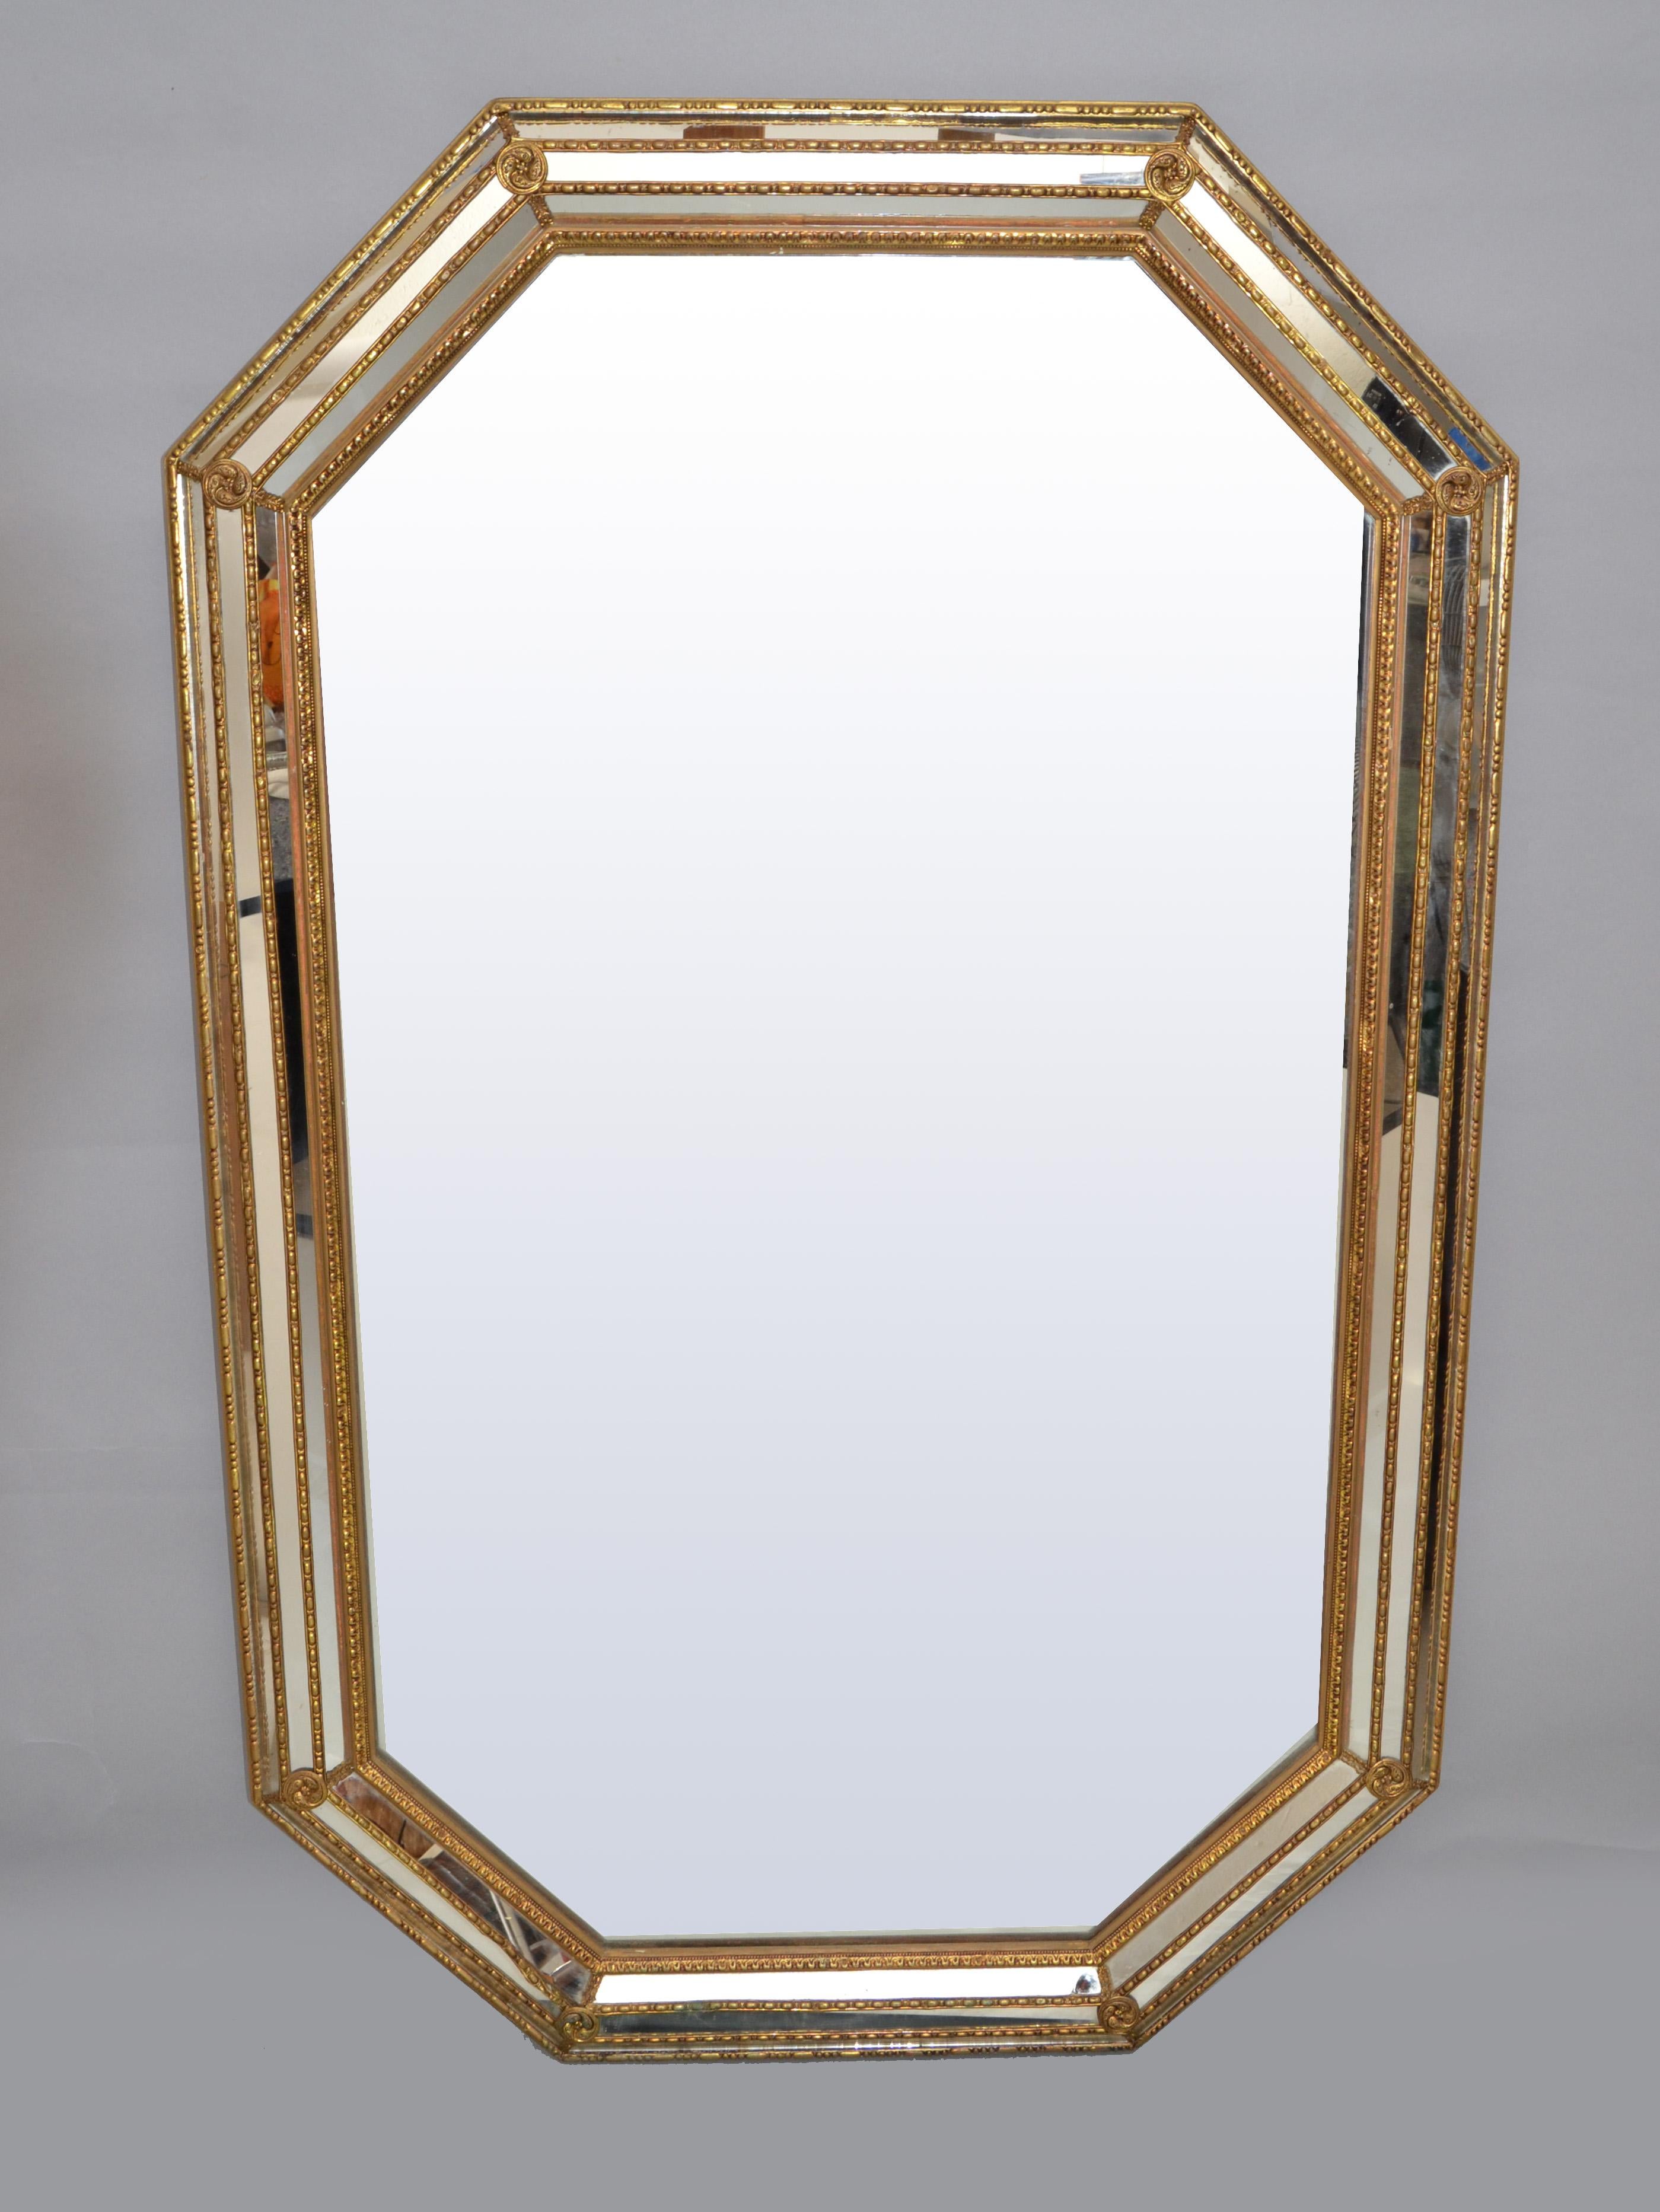 Venetian Hexagonal Wall Mirror Gilt Wood & Bohemian Ornaments 1930 Italy For Sale 8